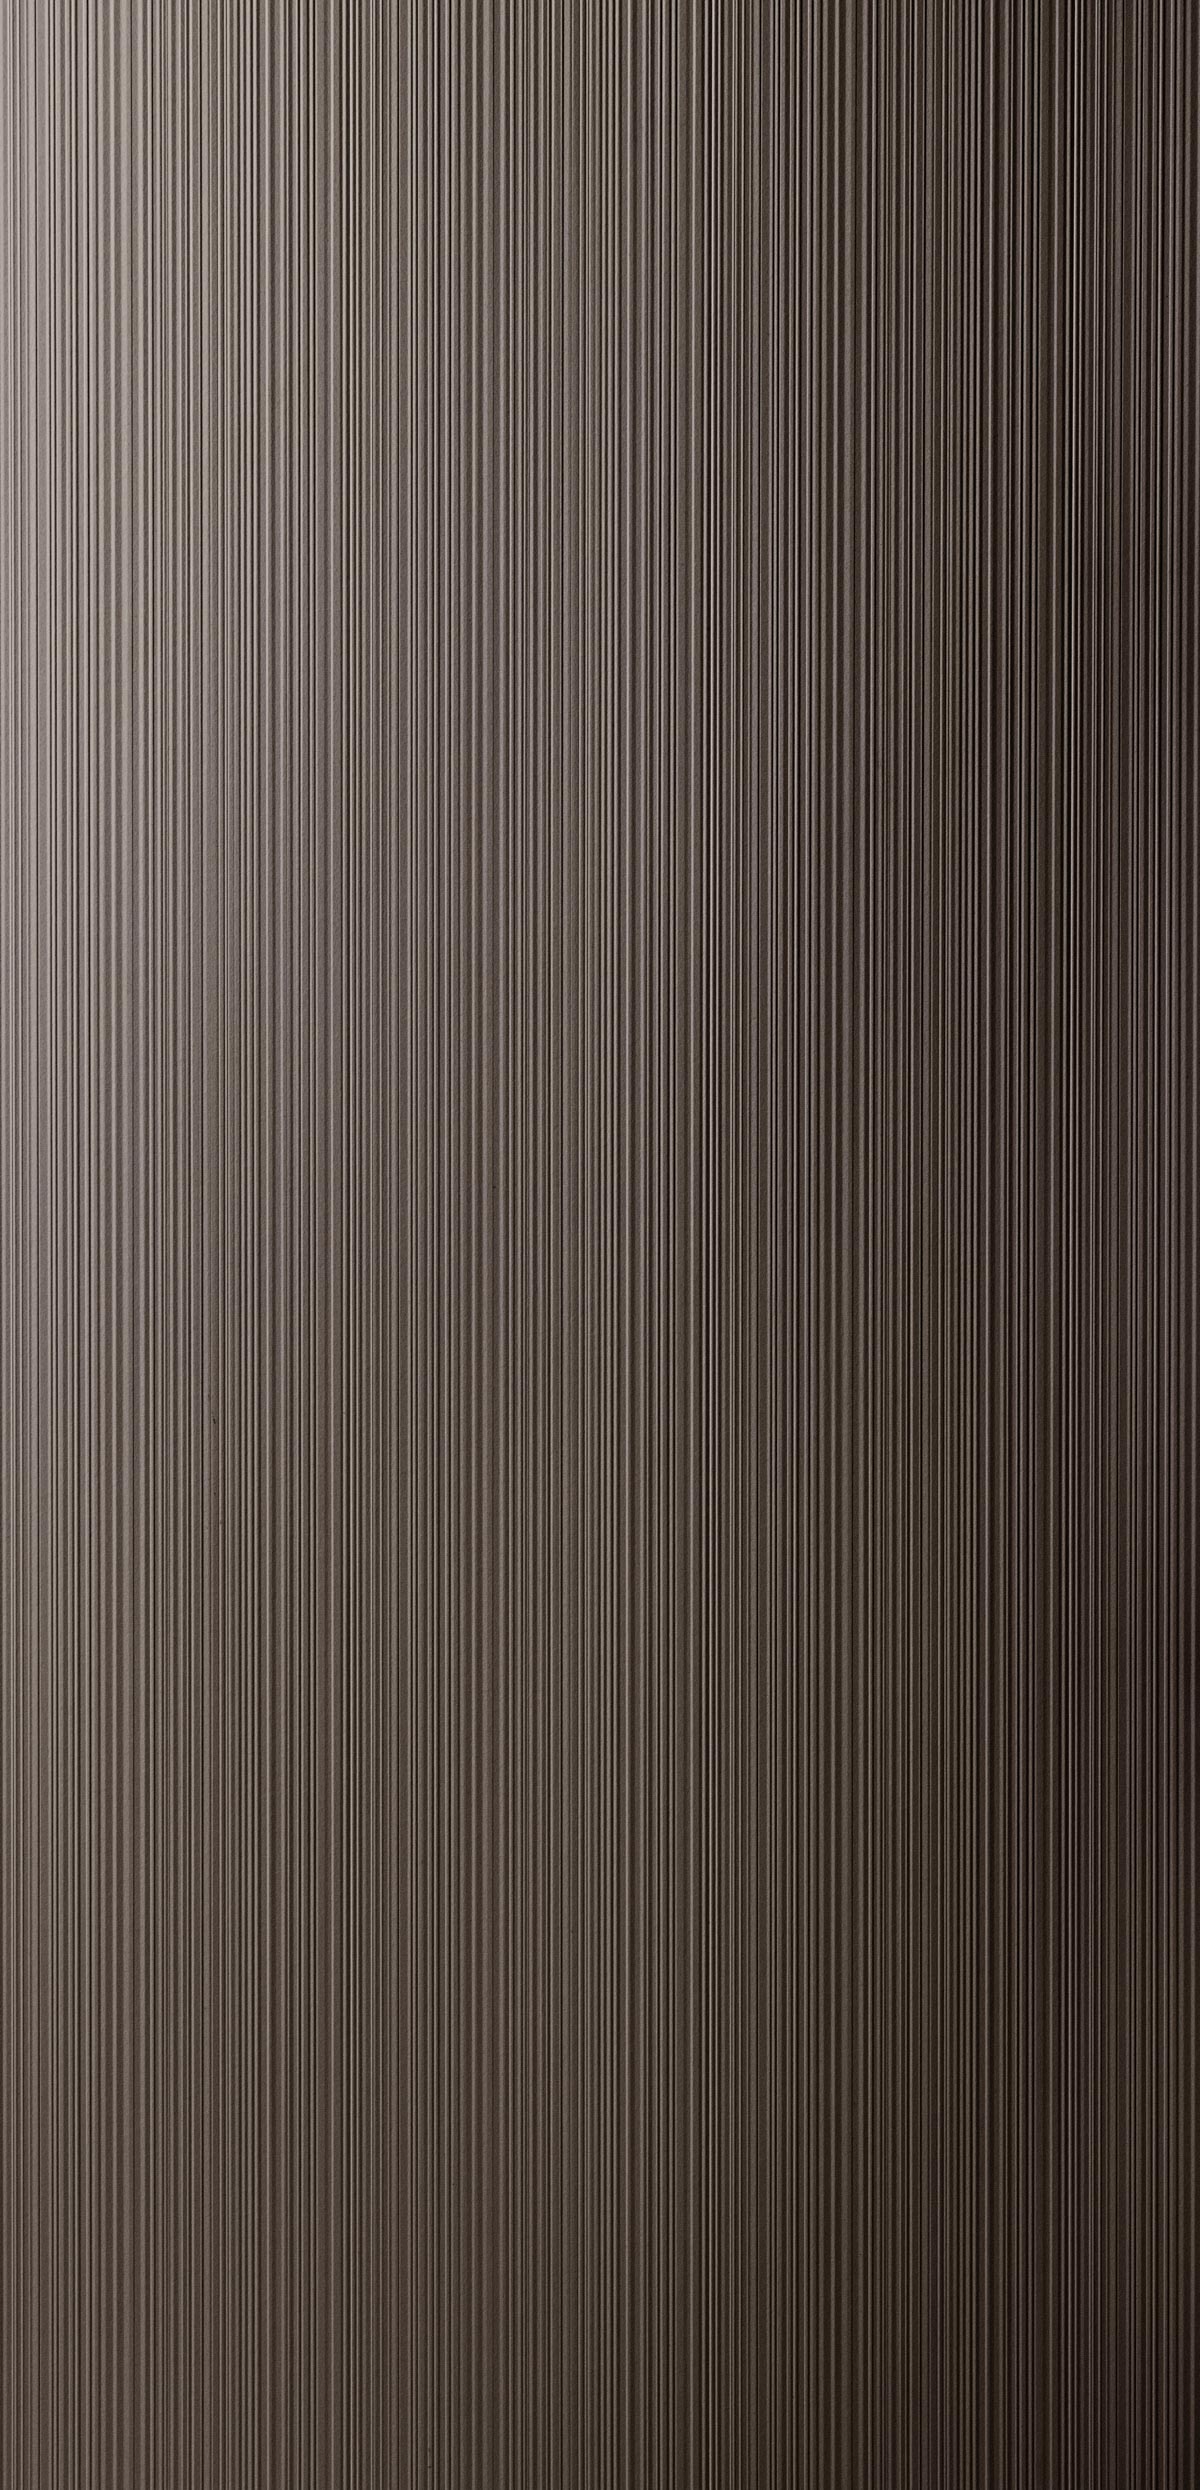 Lines Cocoa 007-panel